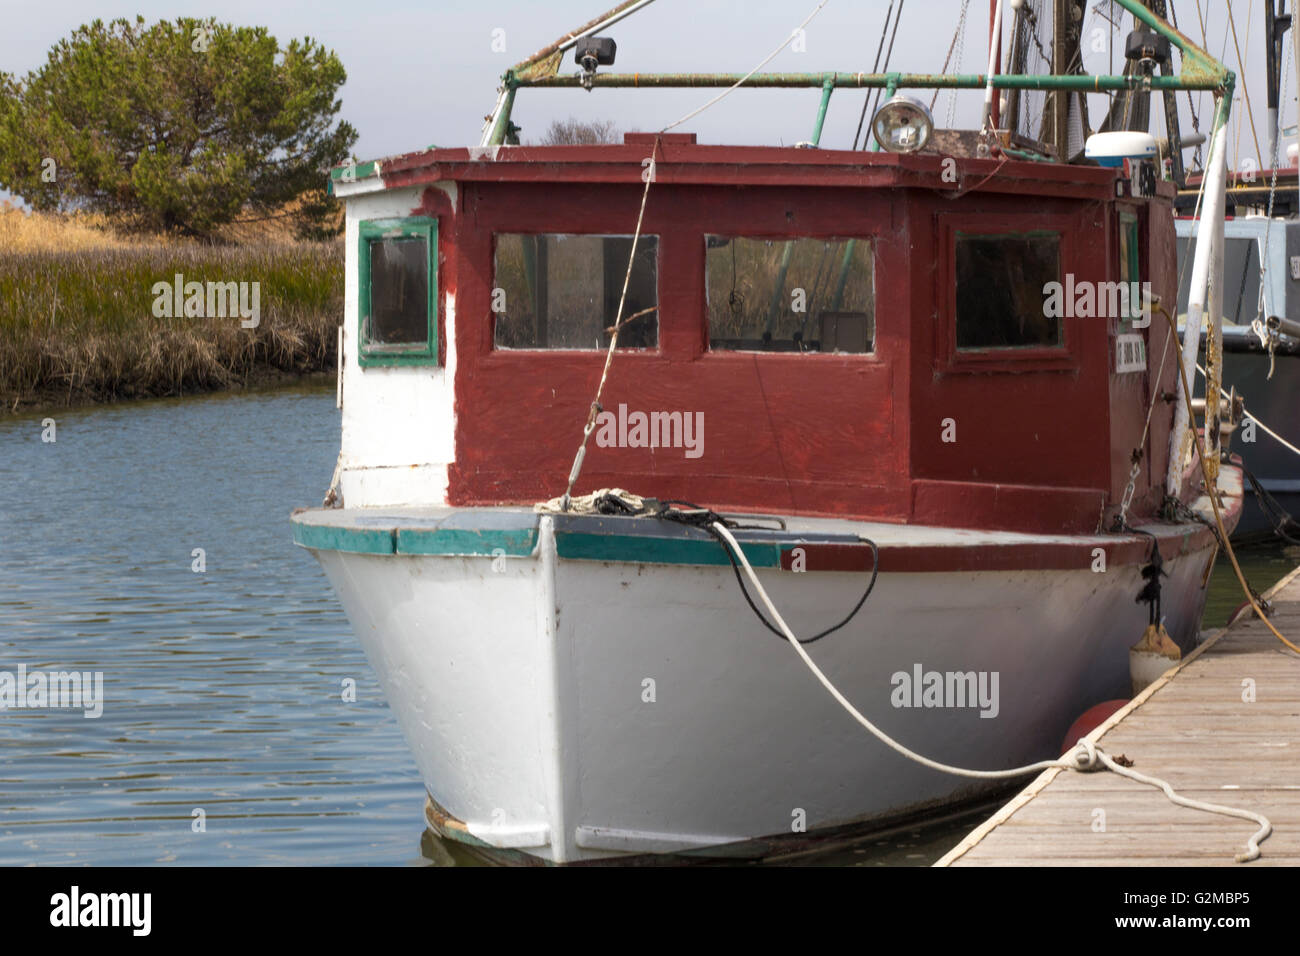 https://c8.alamy.com/comp/G2MBP5/an-old-fishing-boat-docked-in-alviso-california-G2MBP5.jpg